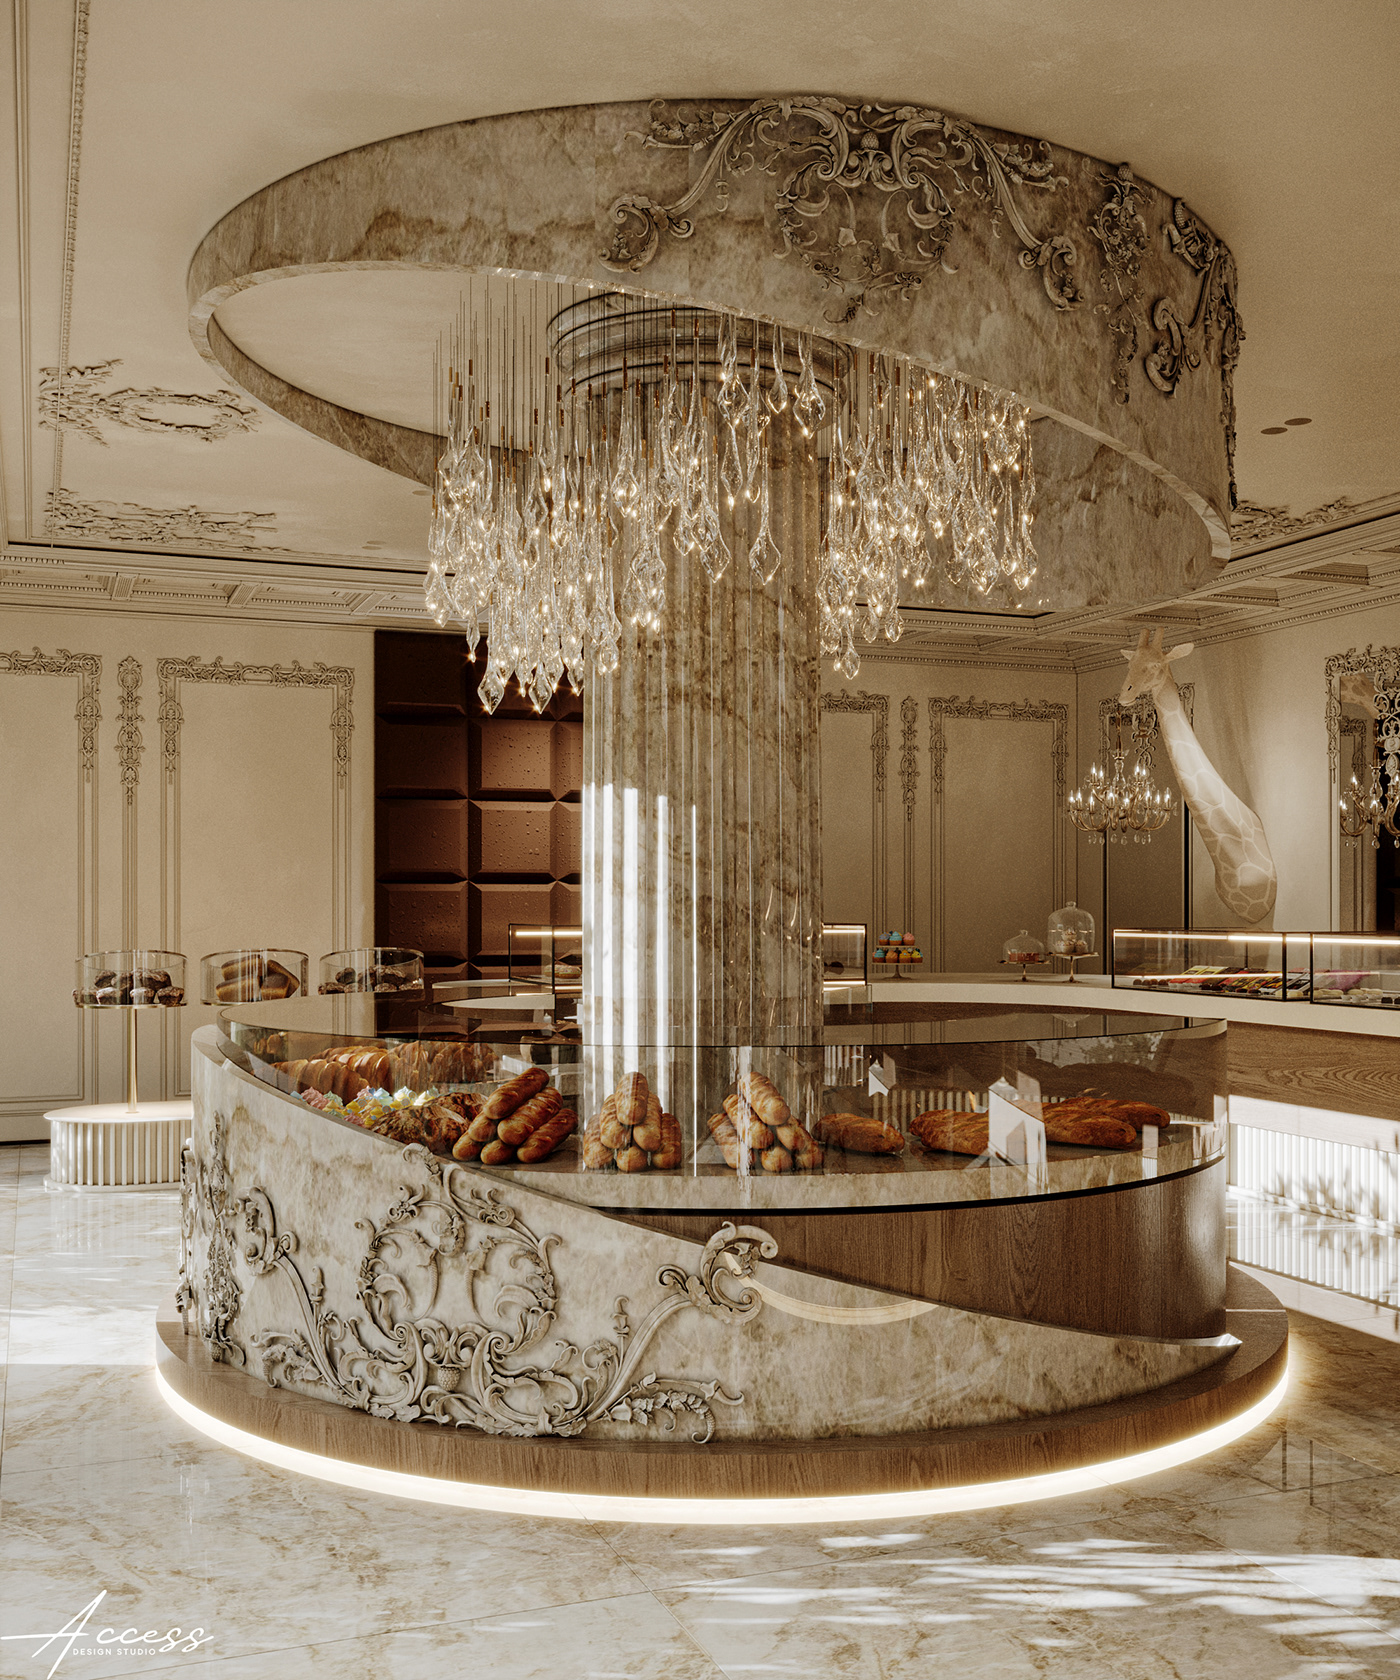 Classic chocolate bakery cafe corona 3ds max CGI archviz interior design  Render